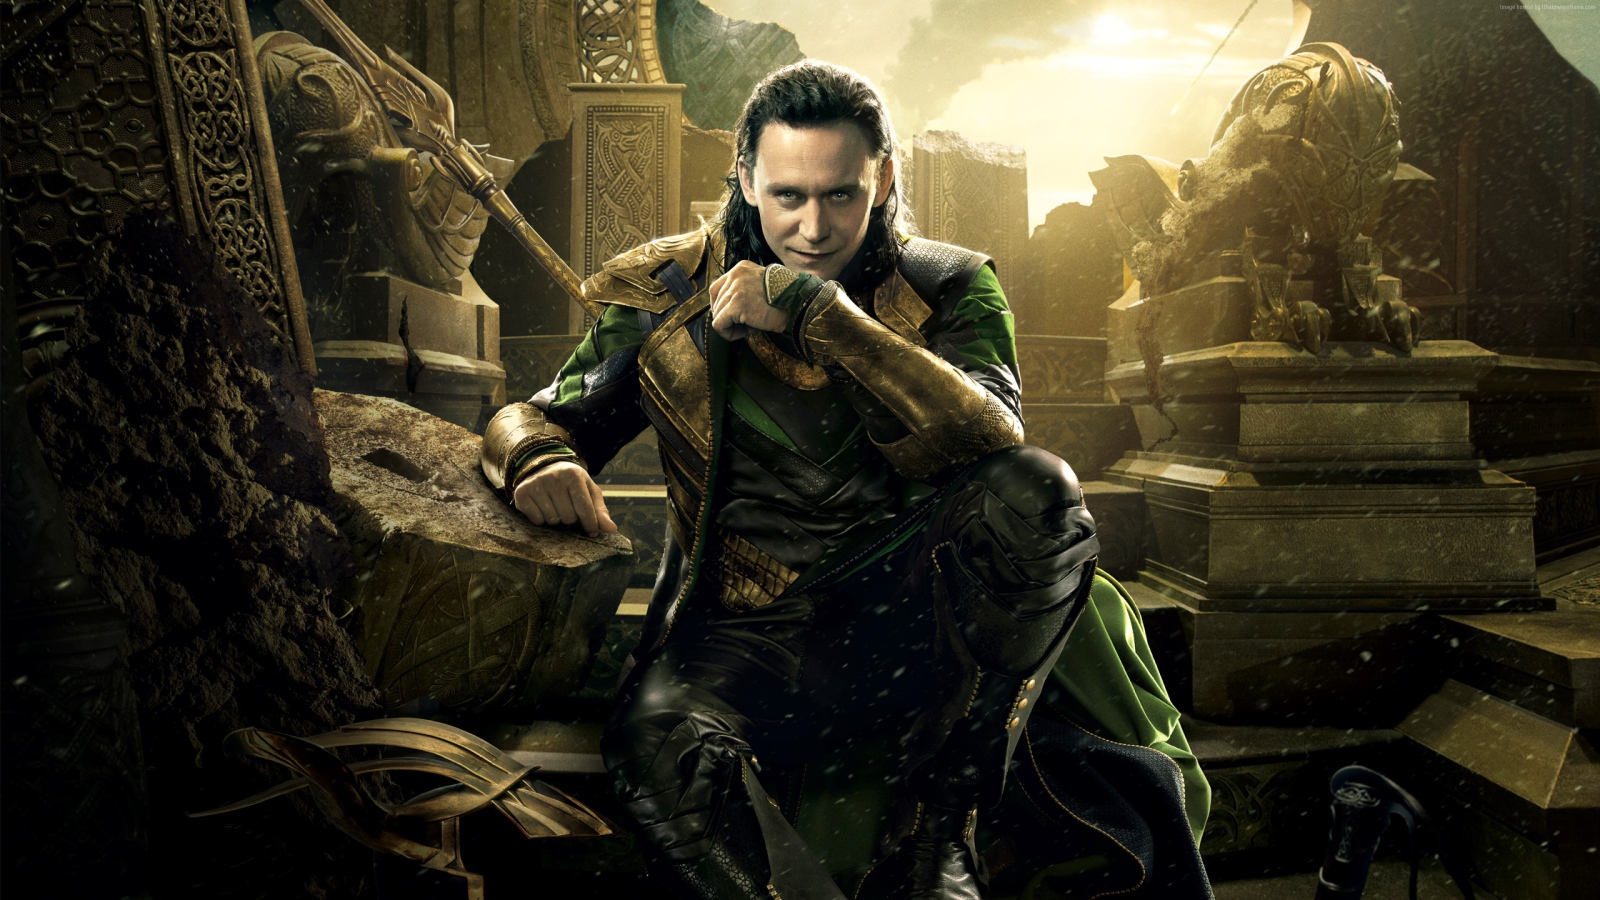 Actor Tom Hiddleston character Loki in the movie Thor. Ragnarok, 2017